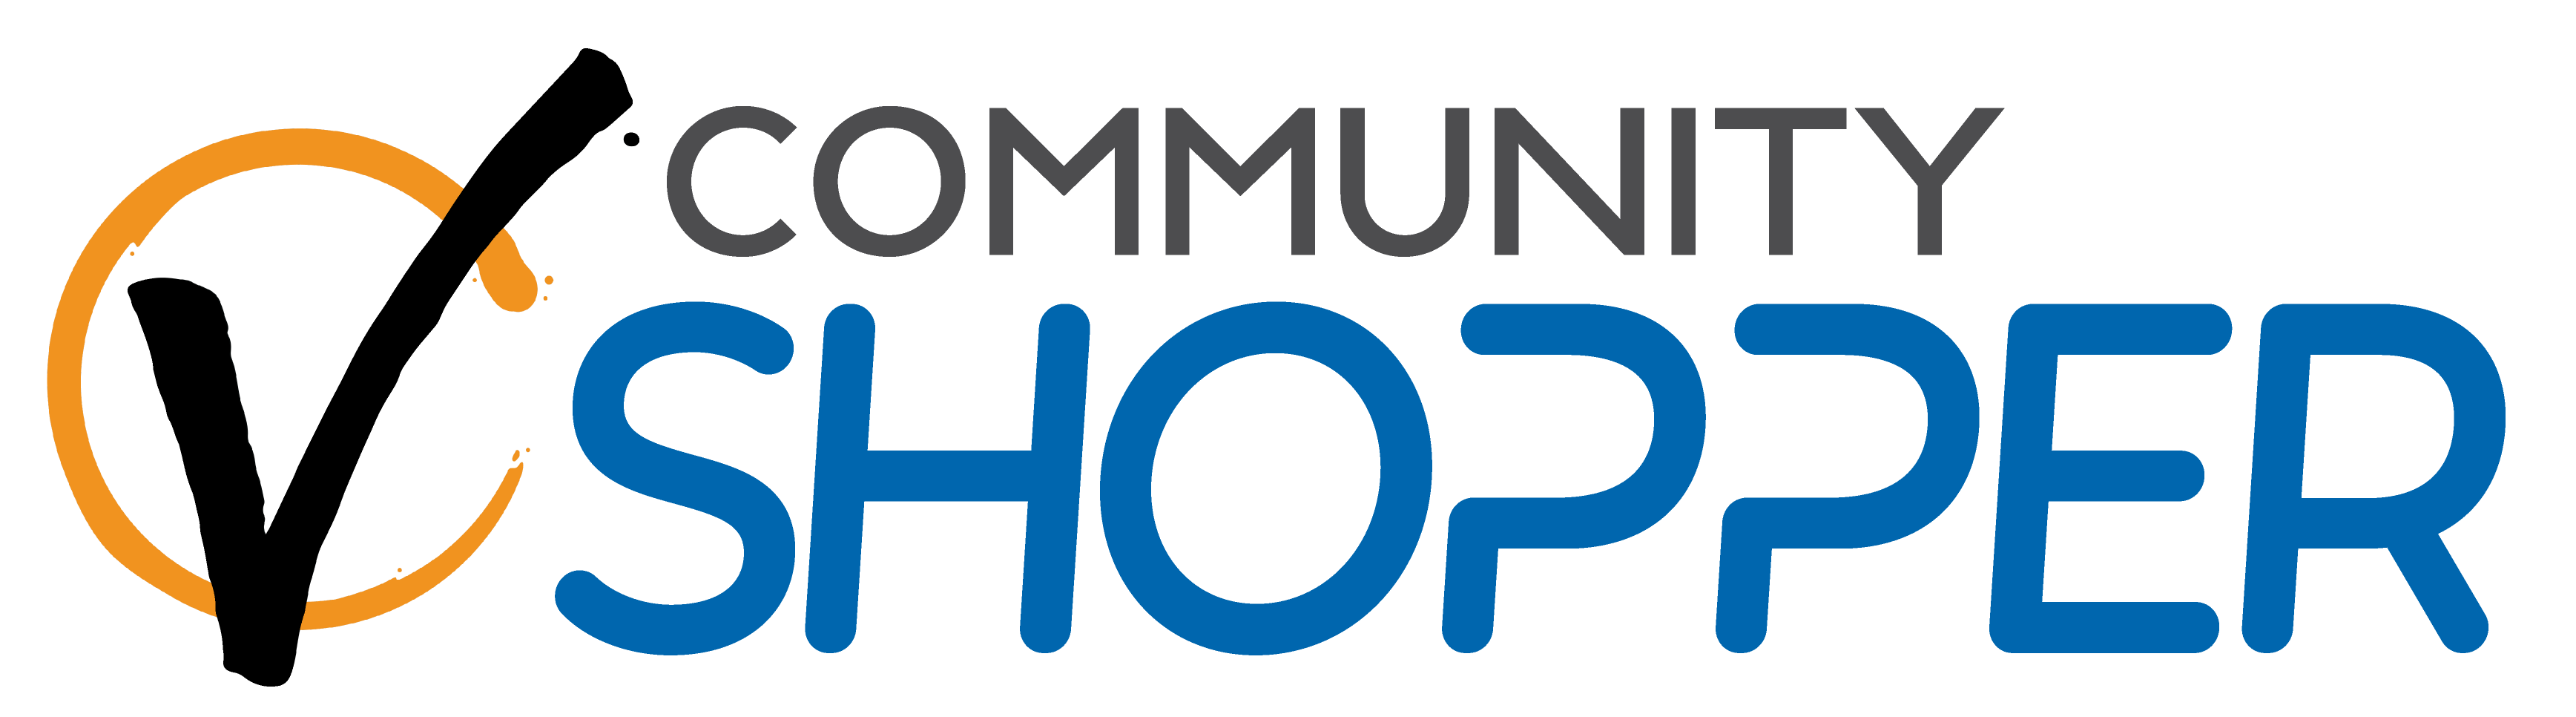 Community-Shopper-Logo-web